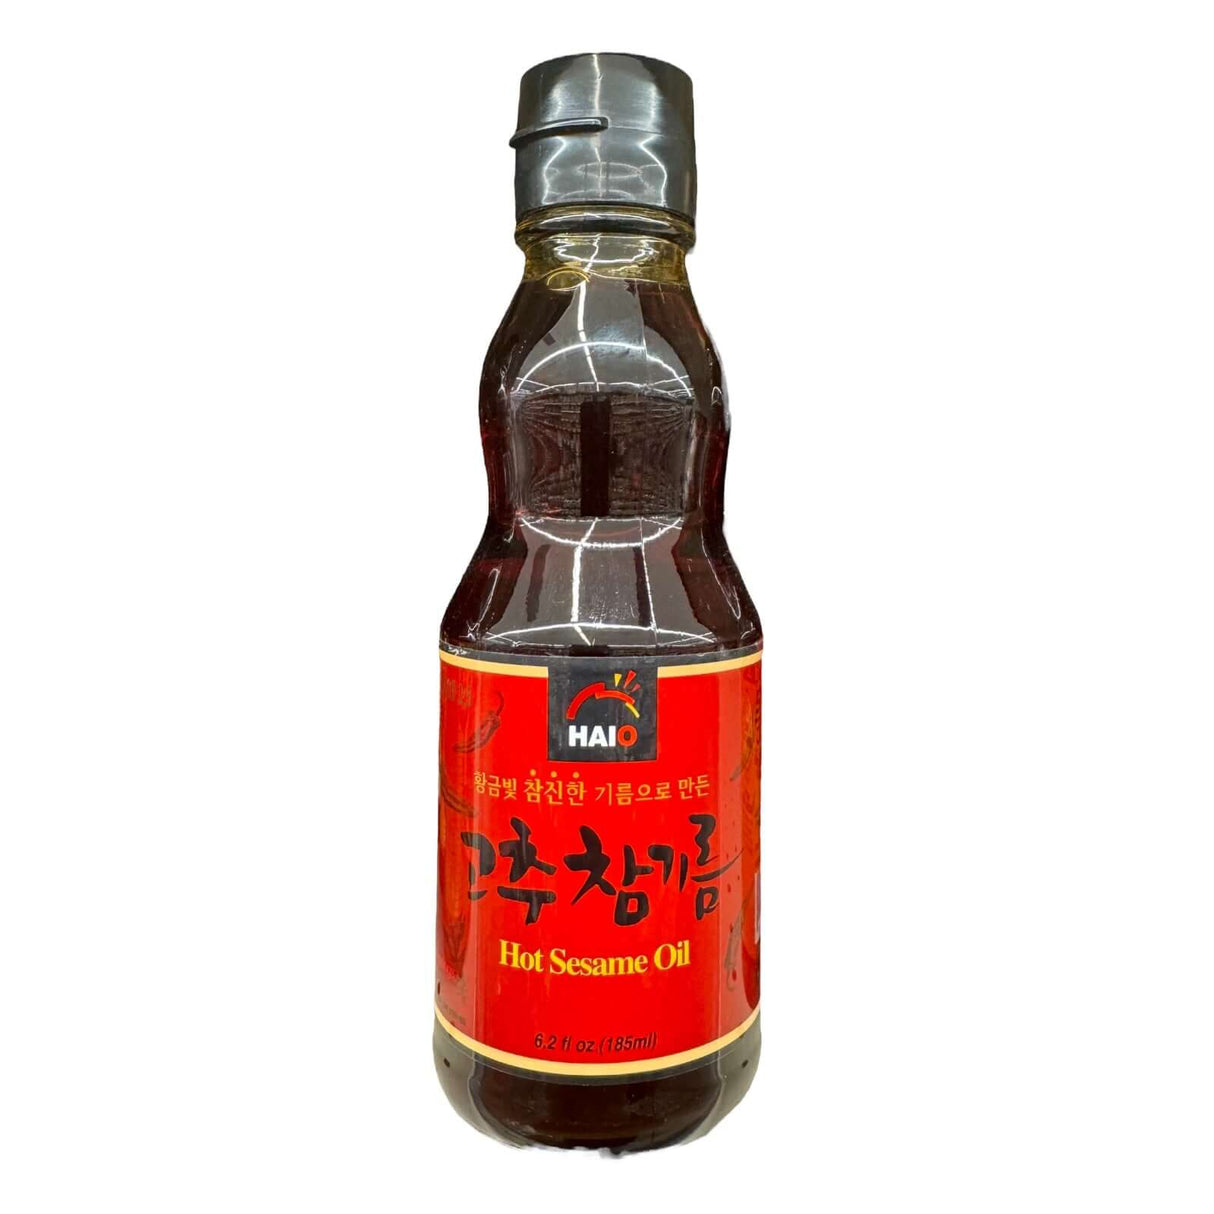 Haio Hot Sesame Oil